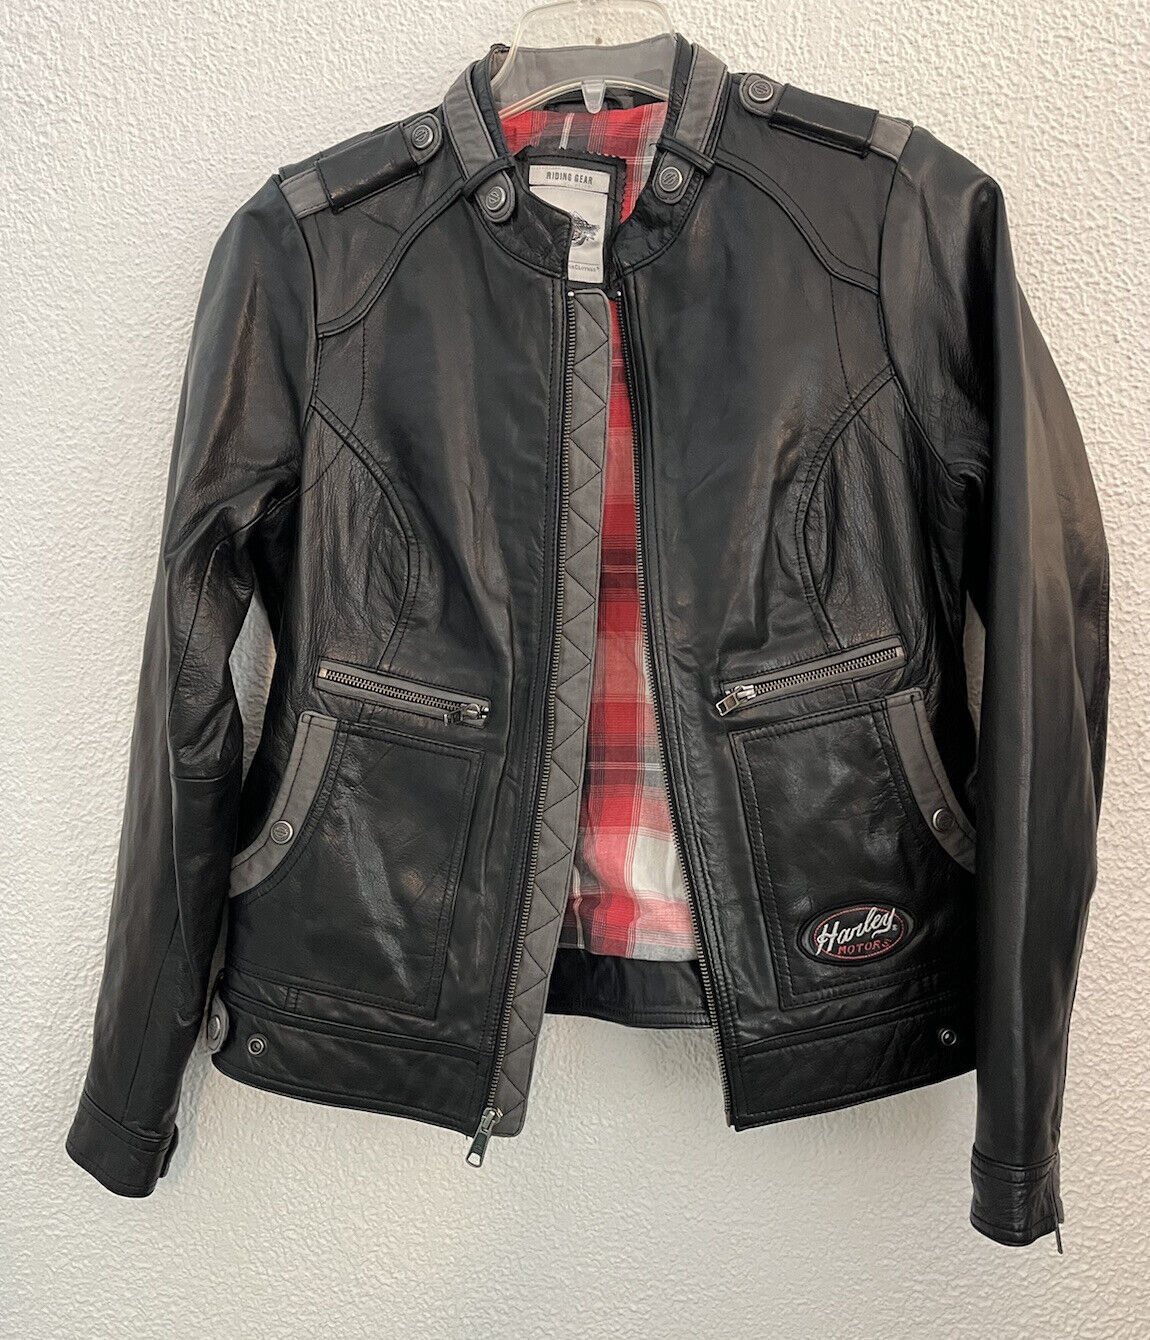 Harley Davidson Riding Gear Size medium M Goat Skin Leather Jacket coat womens